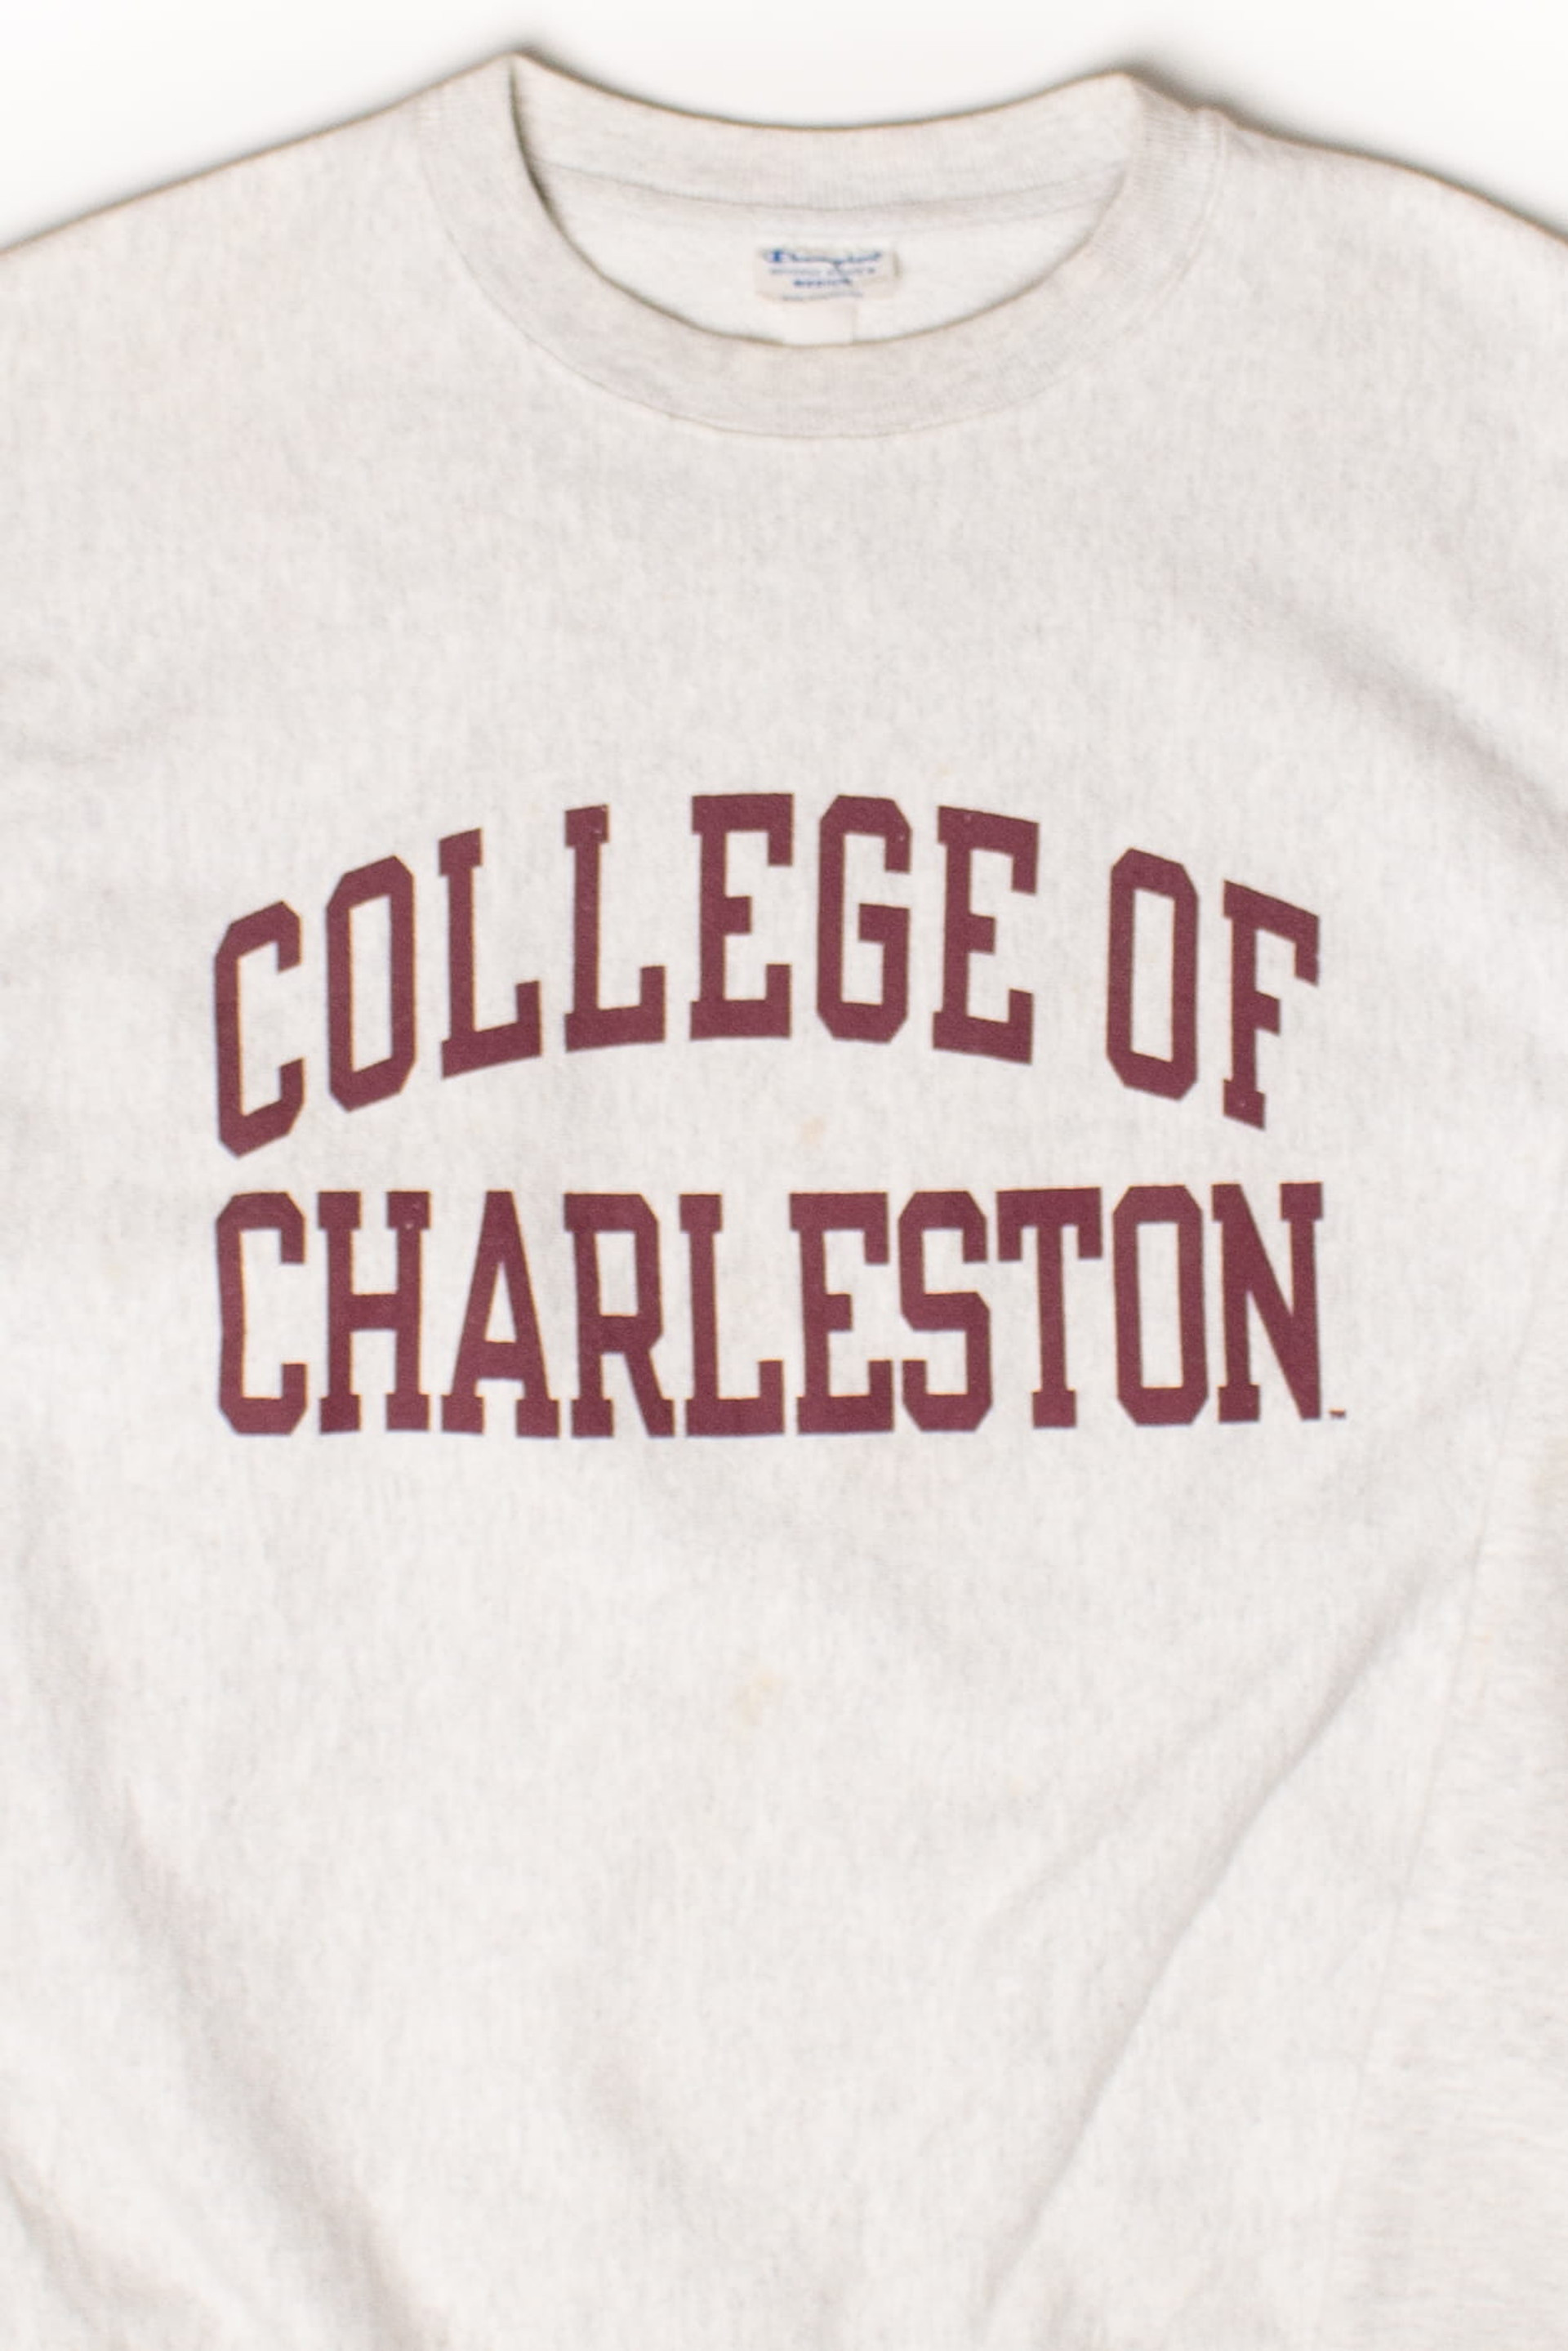 Vintage College of Charleston Sweatshirt (1990s) - Ragstock.com